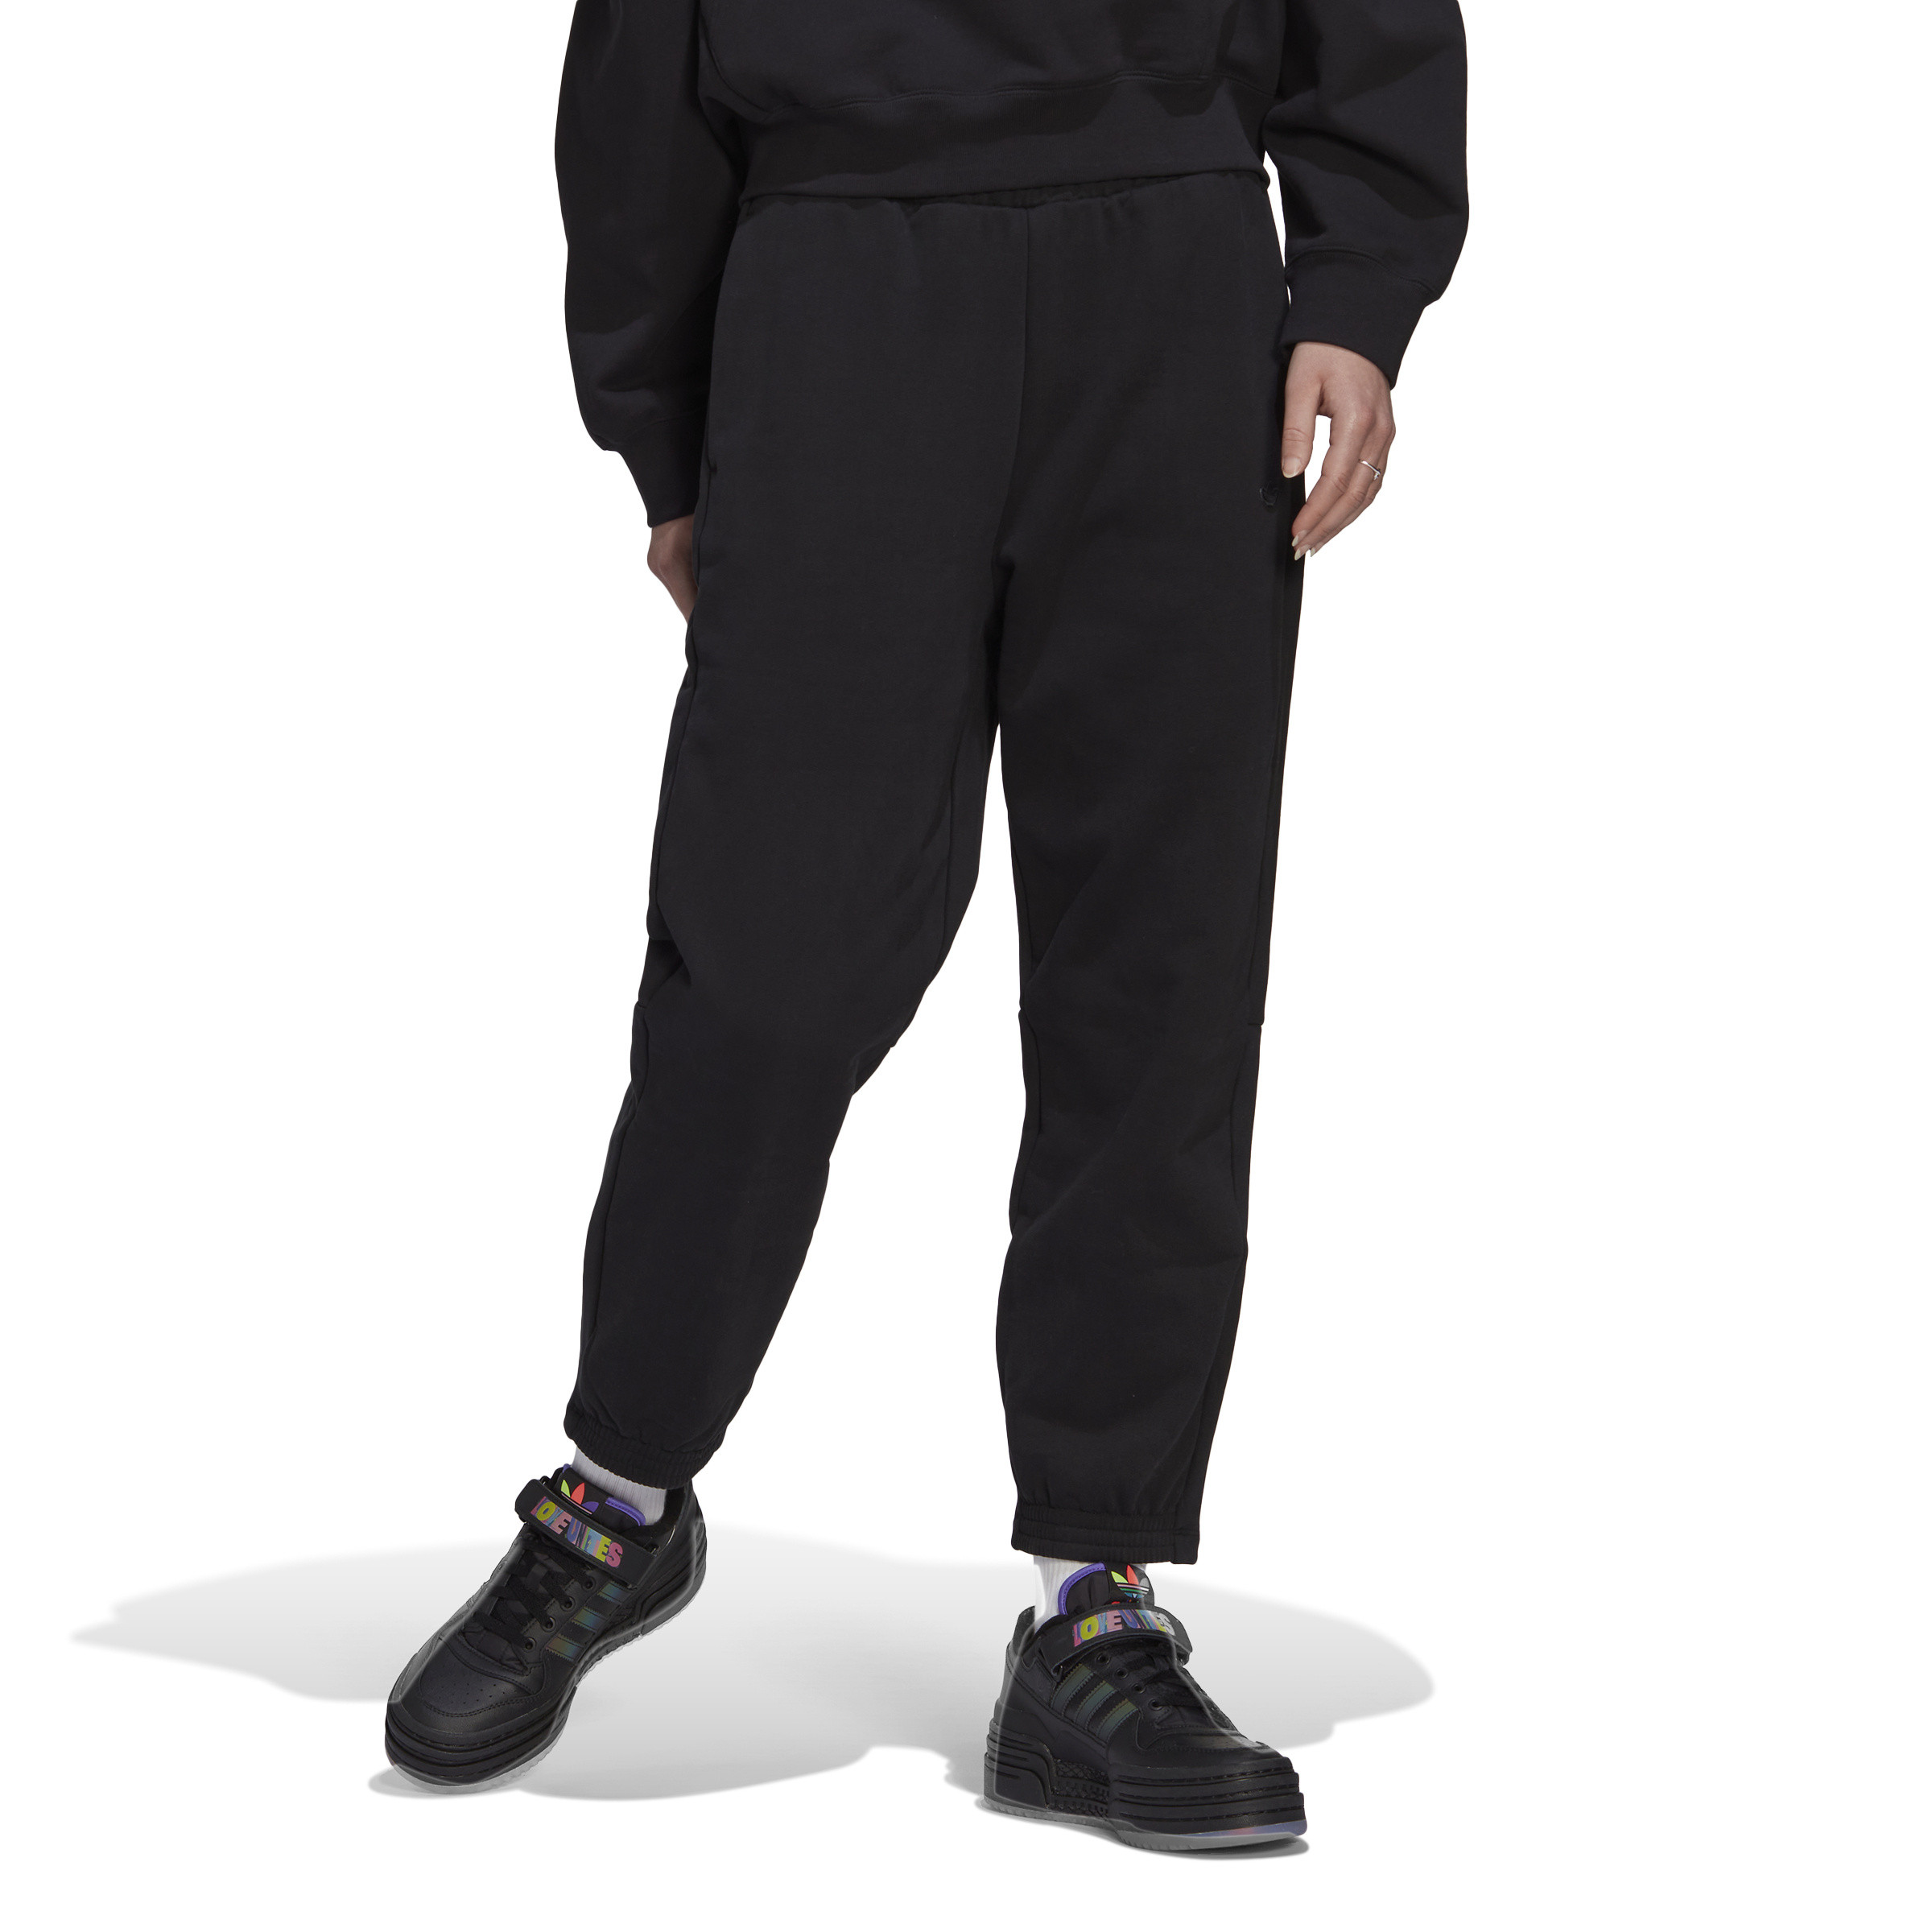 Adidas - Pantaloni jogger adicolor relaxed fit, Nero, large image number 2